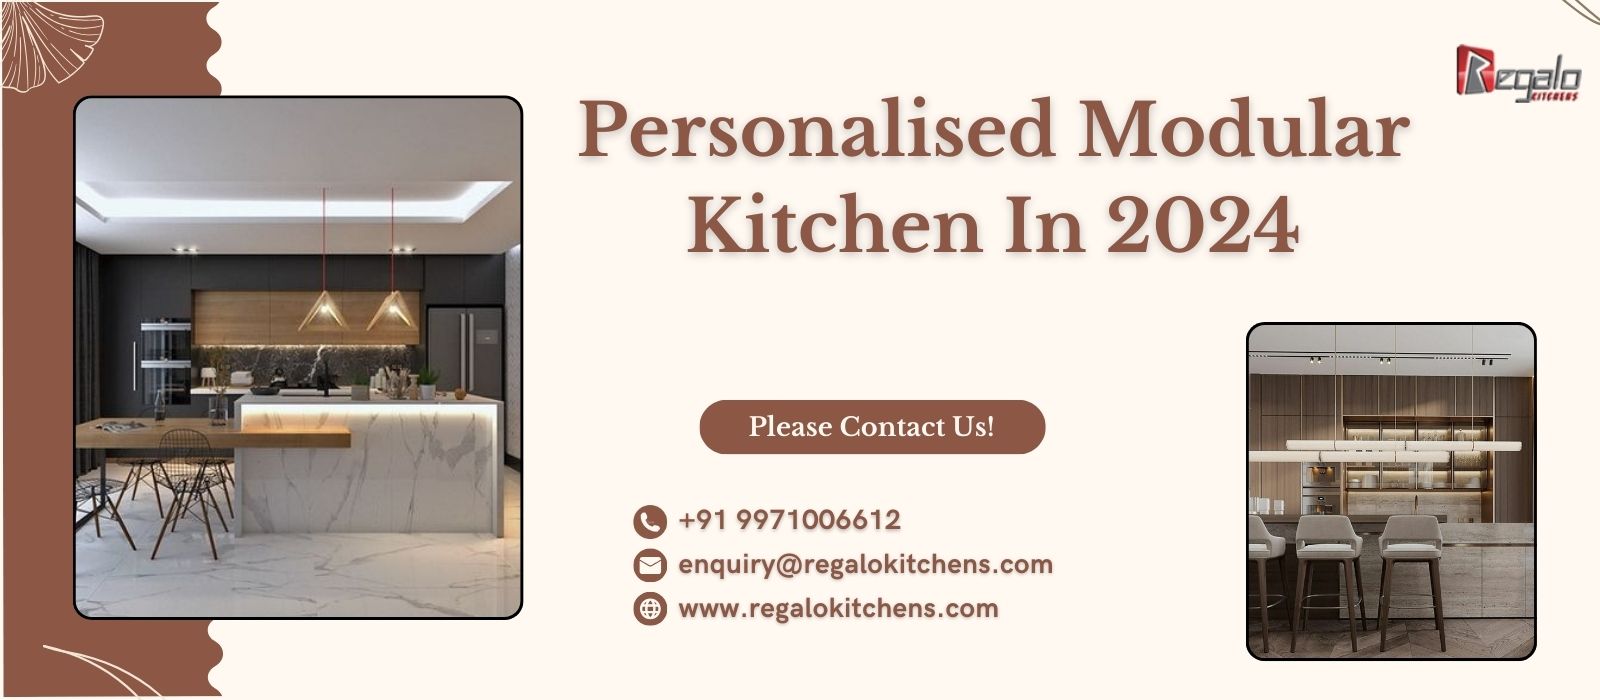 Personalised Modular Kitchen In 2024